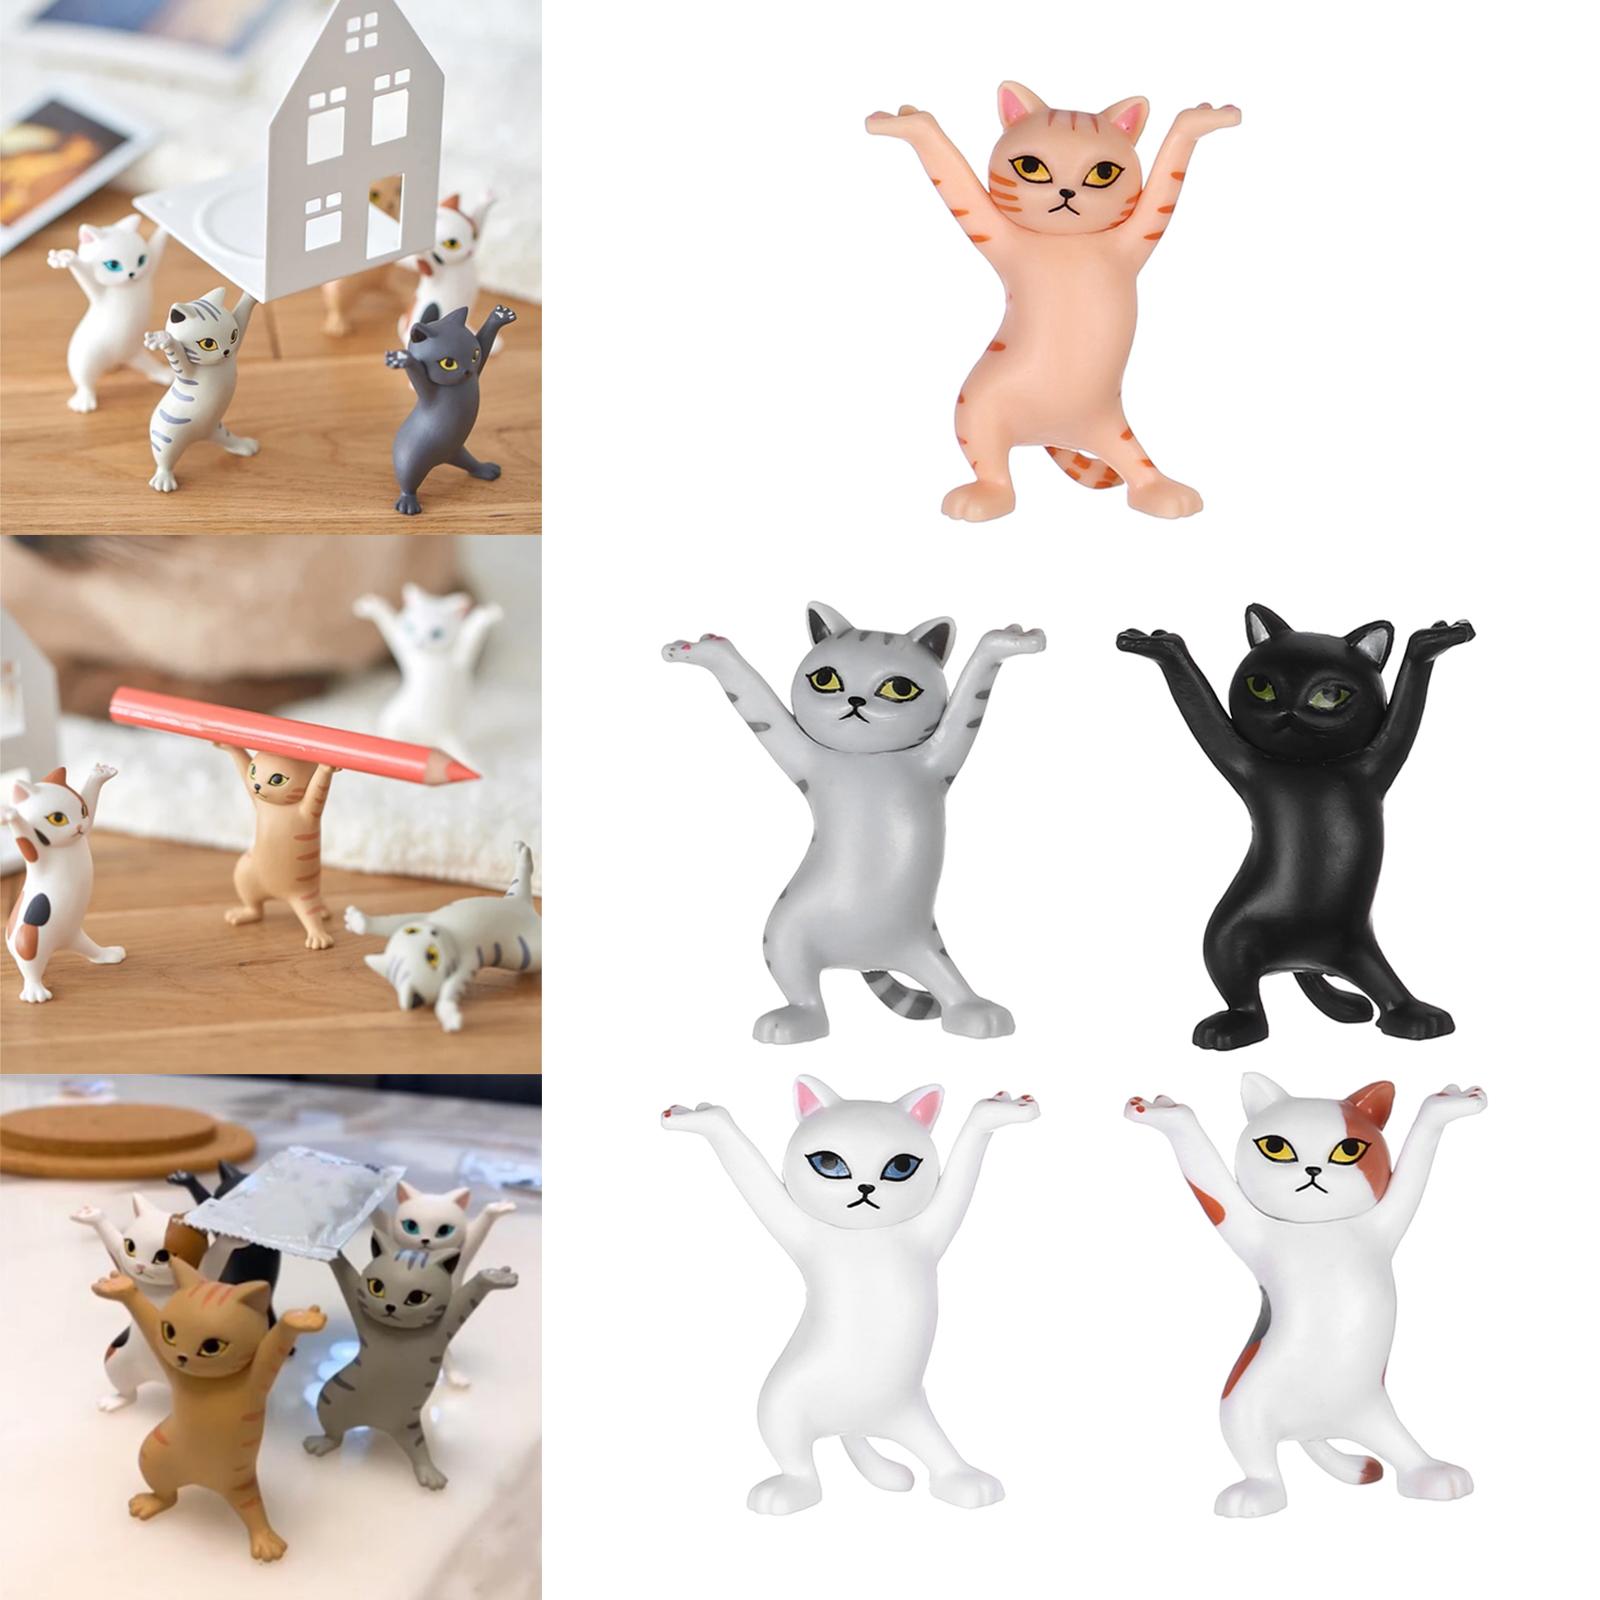 5pcs Dancing Cute Cats Dance Figure Action Toys Tabletop Sculpture Display